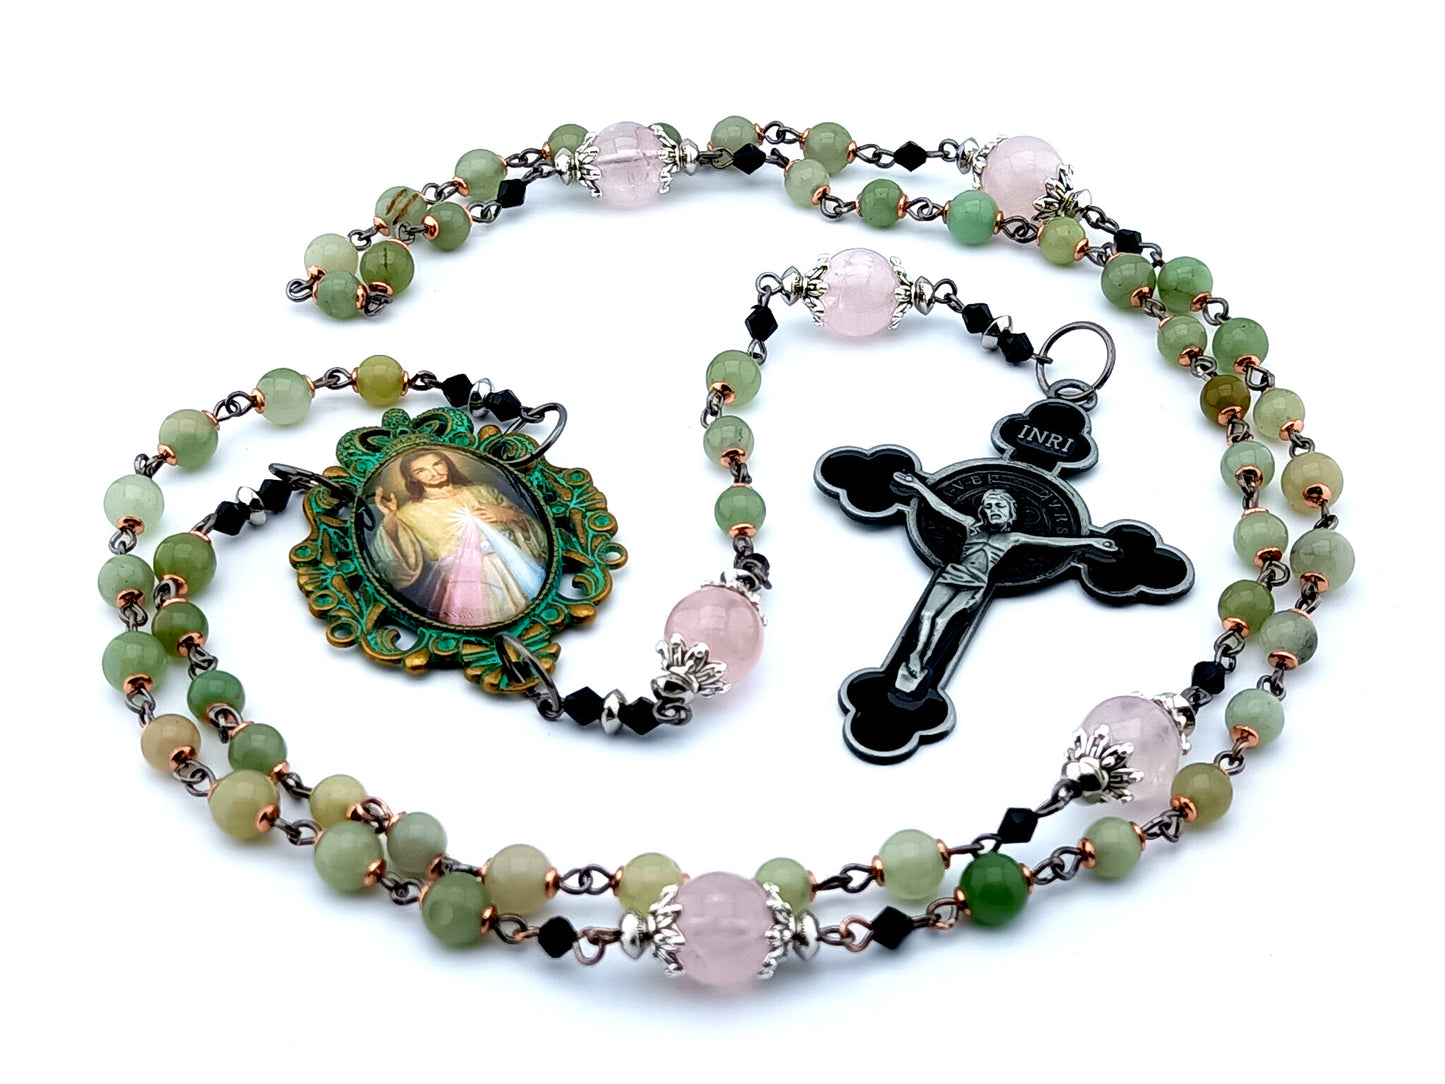 Verdigris Divine Mercy unique rosary beads with jasper gemstone and rose quartz Our Father beads and enamel Saint Benedict crucifix.